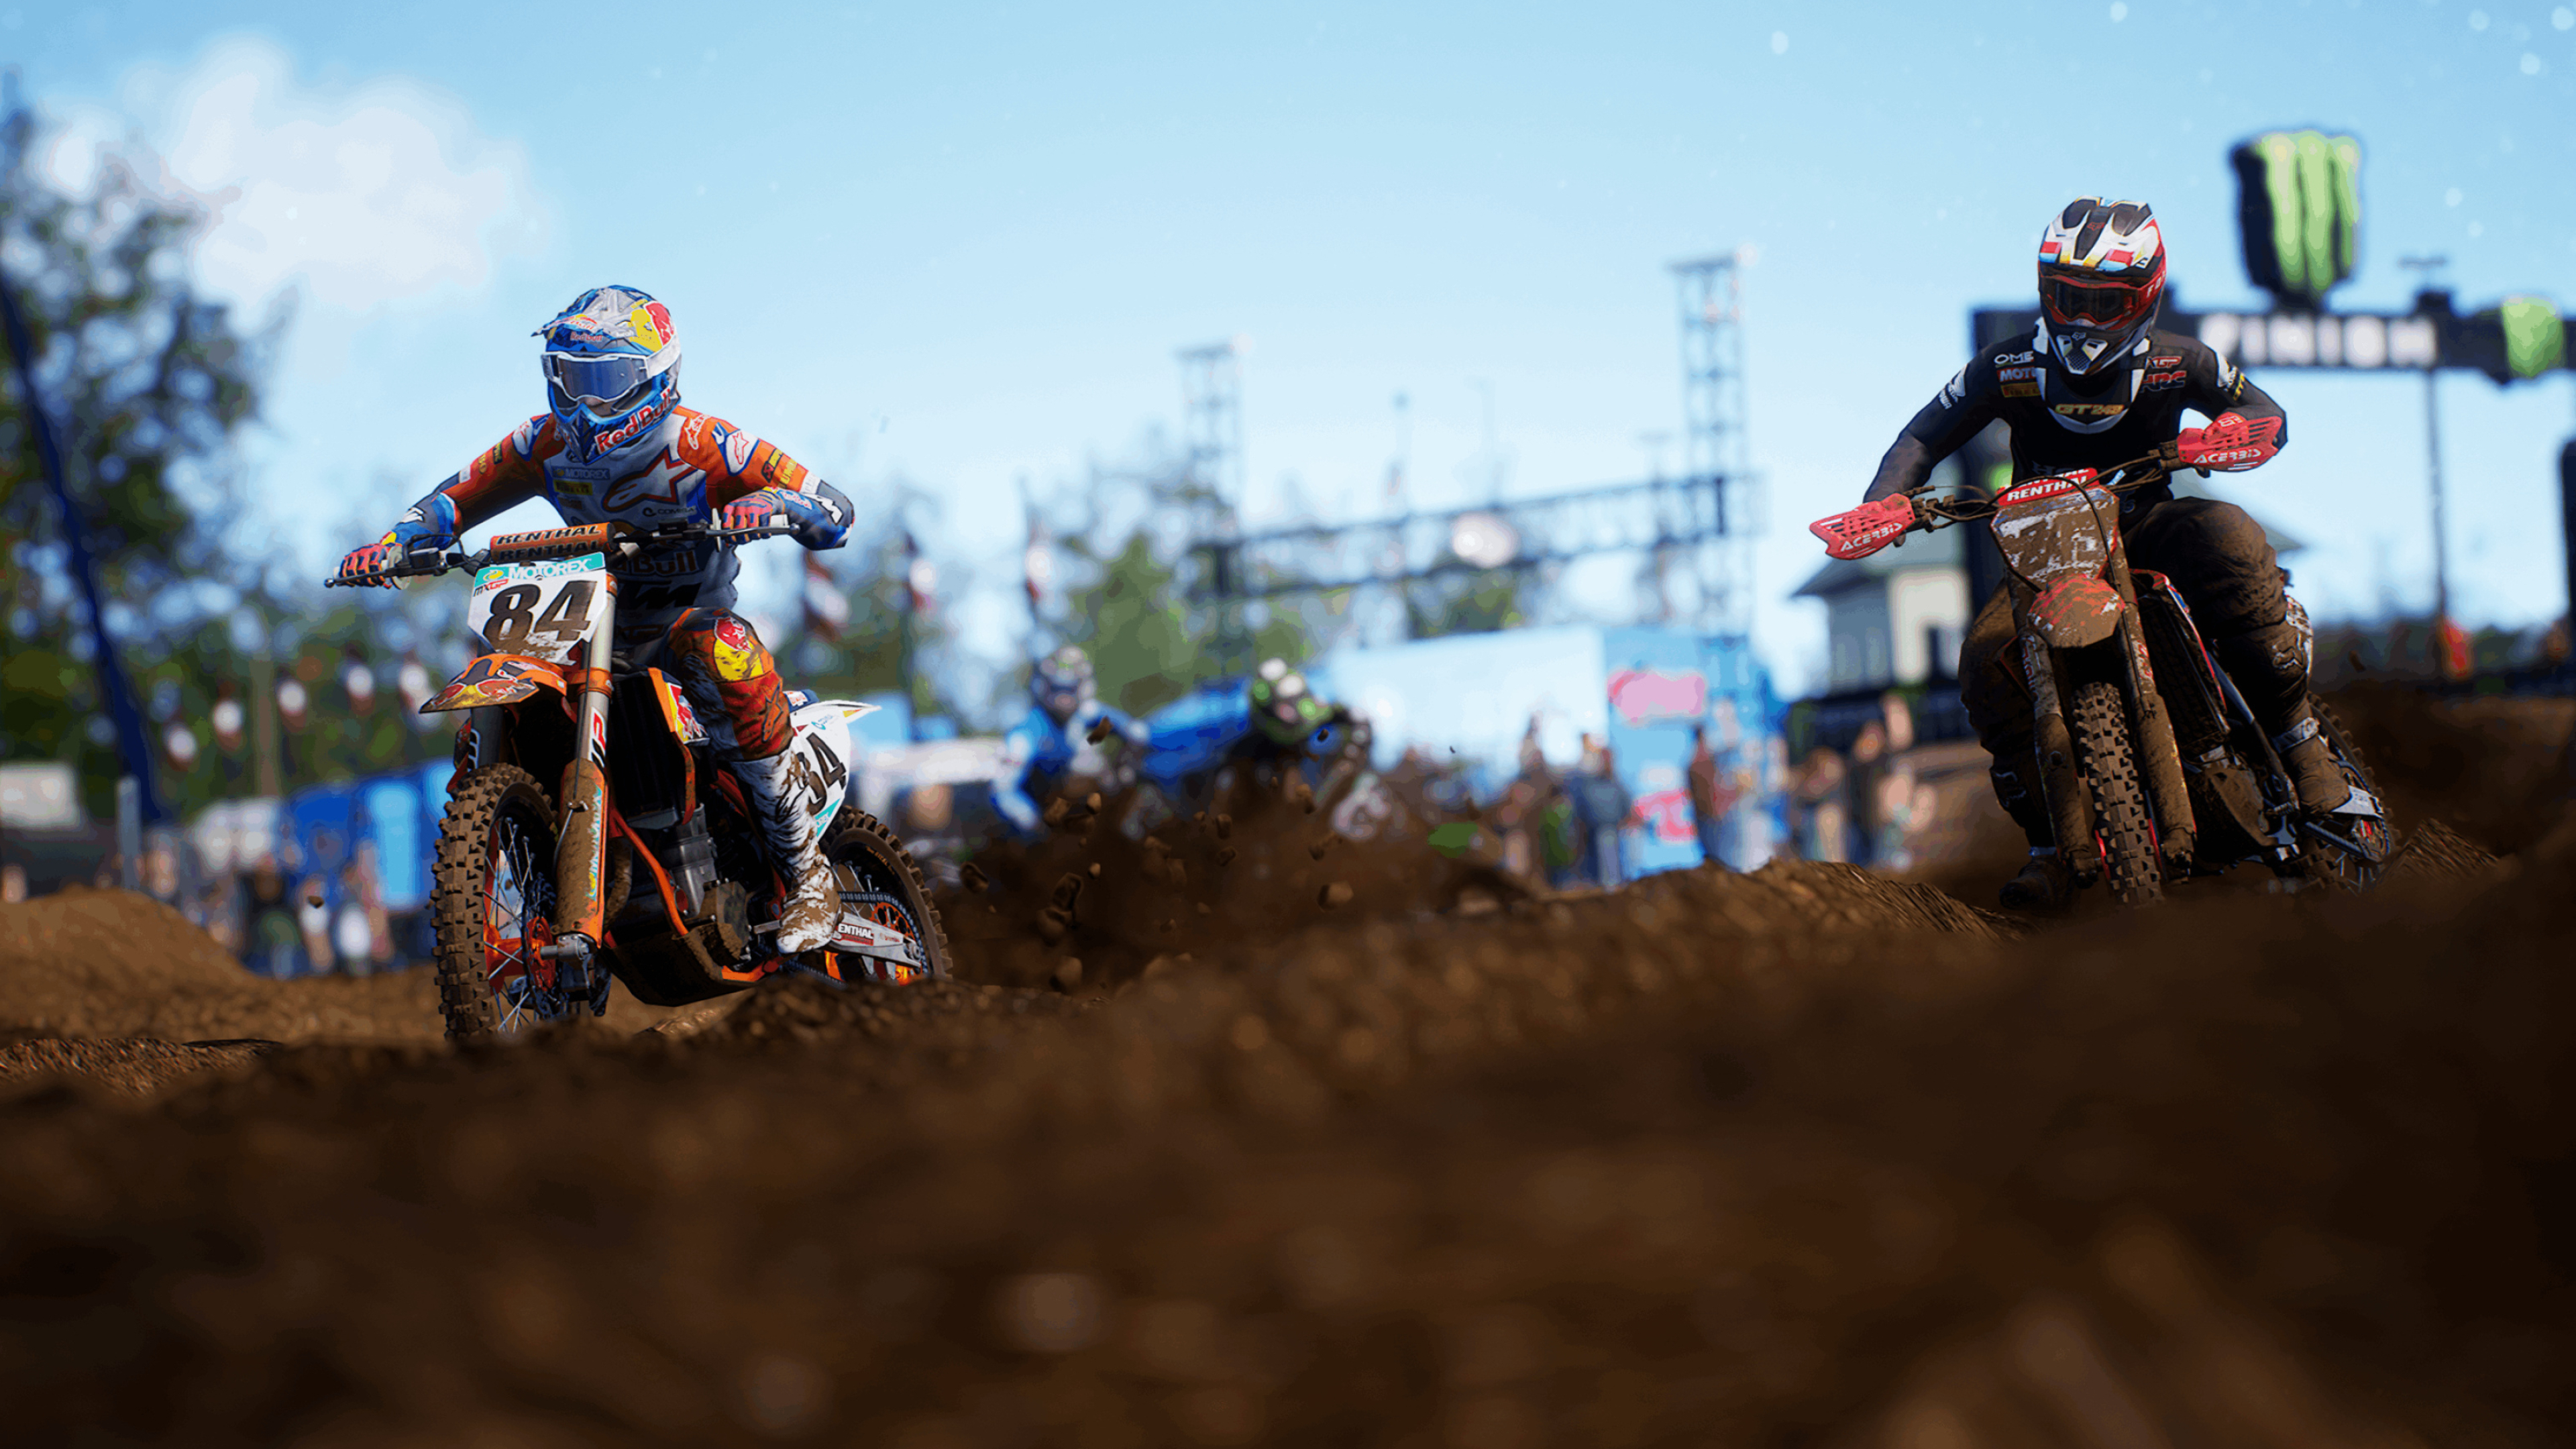 Motocross: MXGP 2019, By Milestone, Xbox One, PlayStation 4, August 26, 2019, Steam Community. 3840x2160 4K Background.